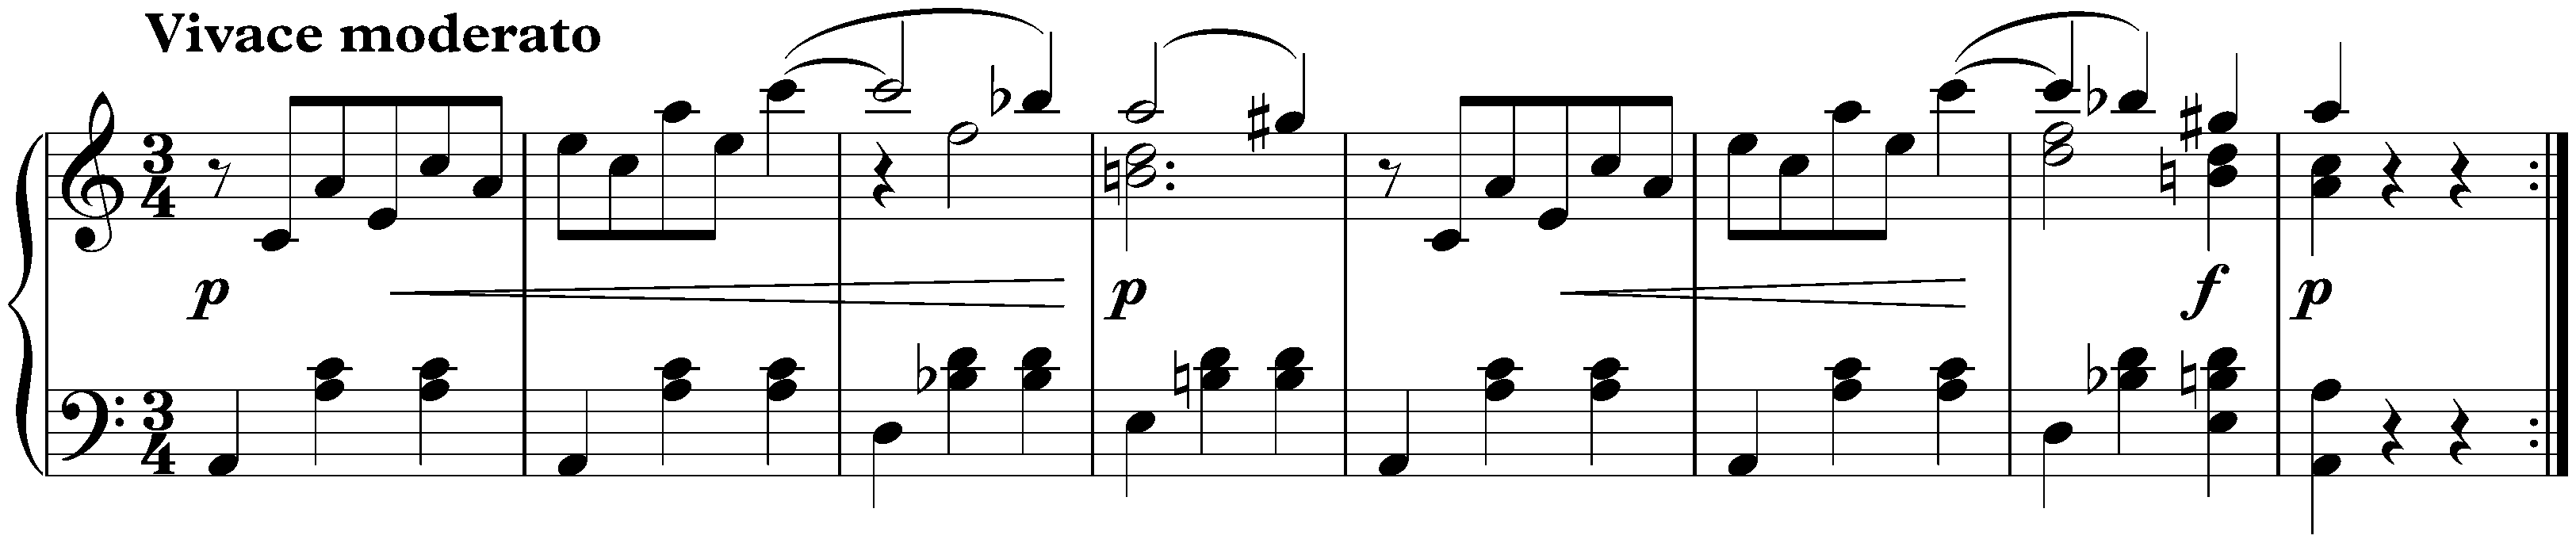 Eleven Bagatelles, op. 119; 9. A minor